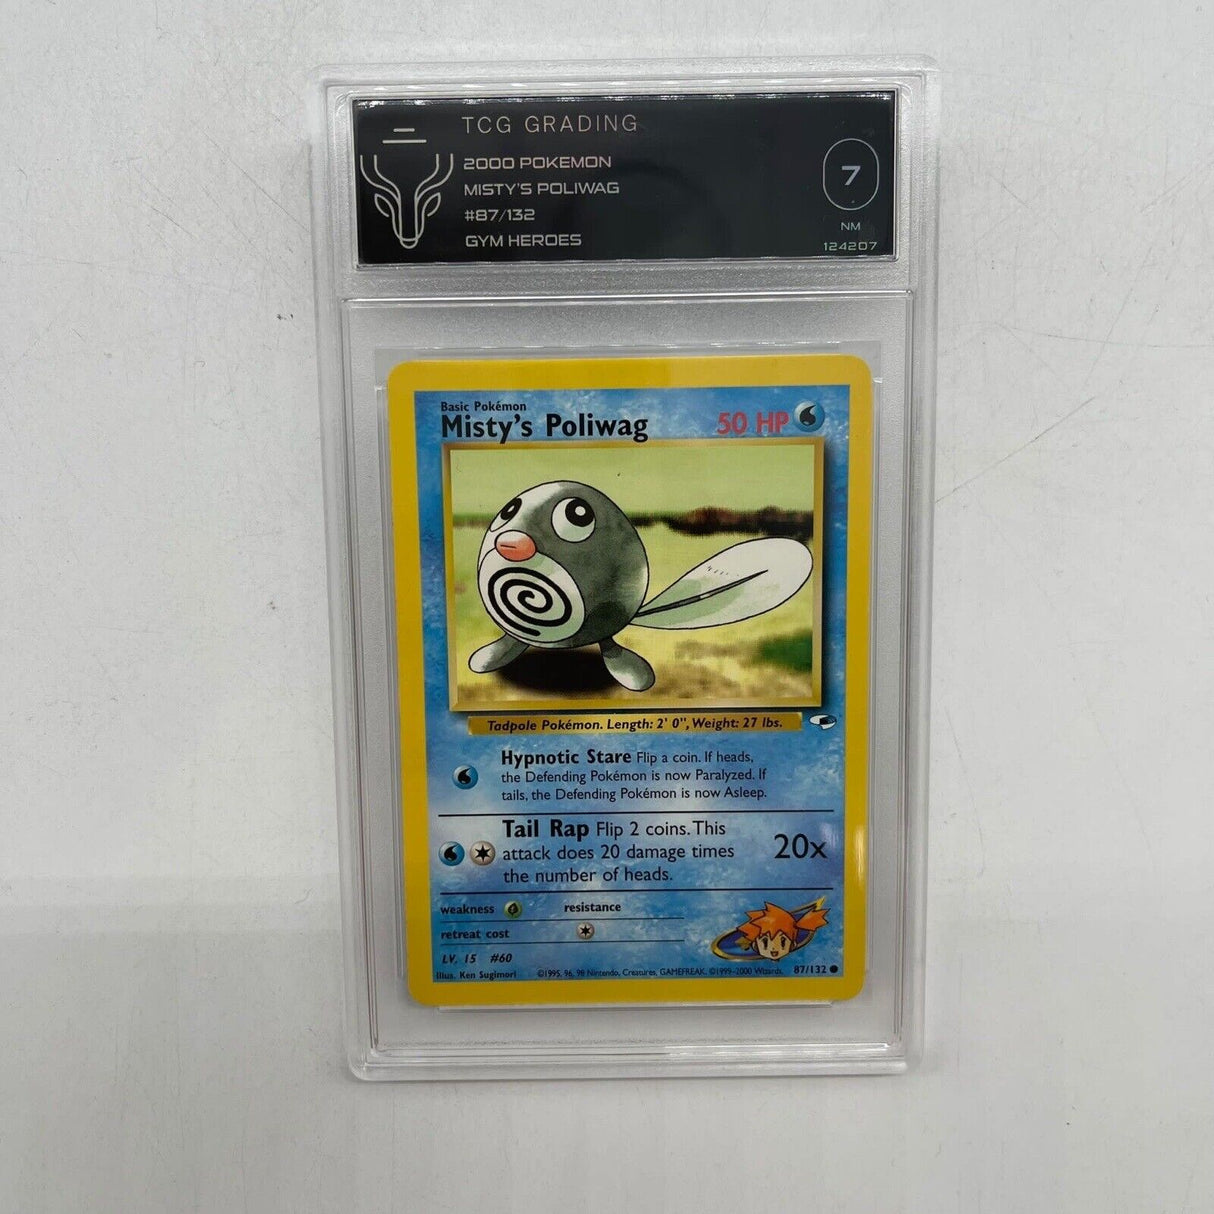 Misty's Poliwag Pokemon Card 87/132 Gym Heroes Graded TCG 7